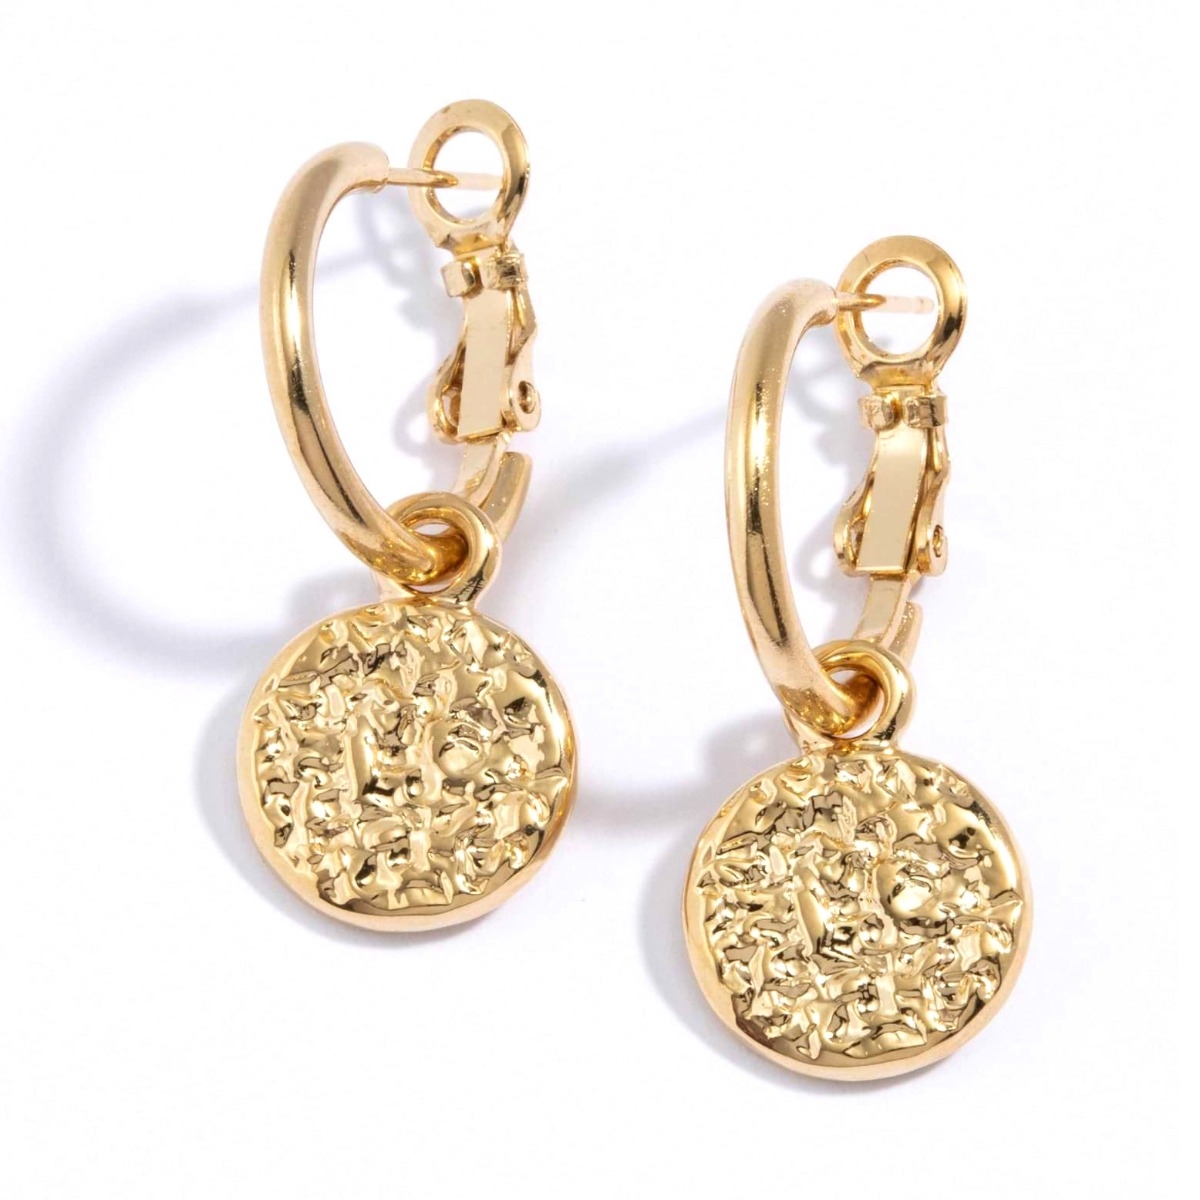 Danon 24K Gold-Plated Kon Earrings - 1